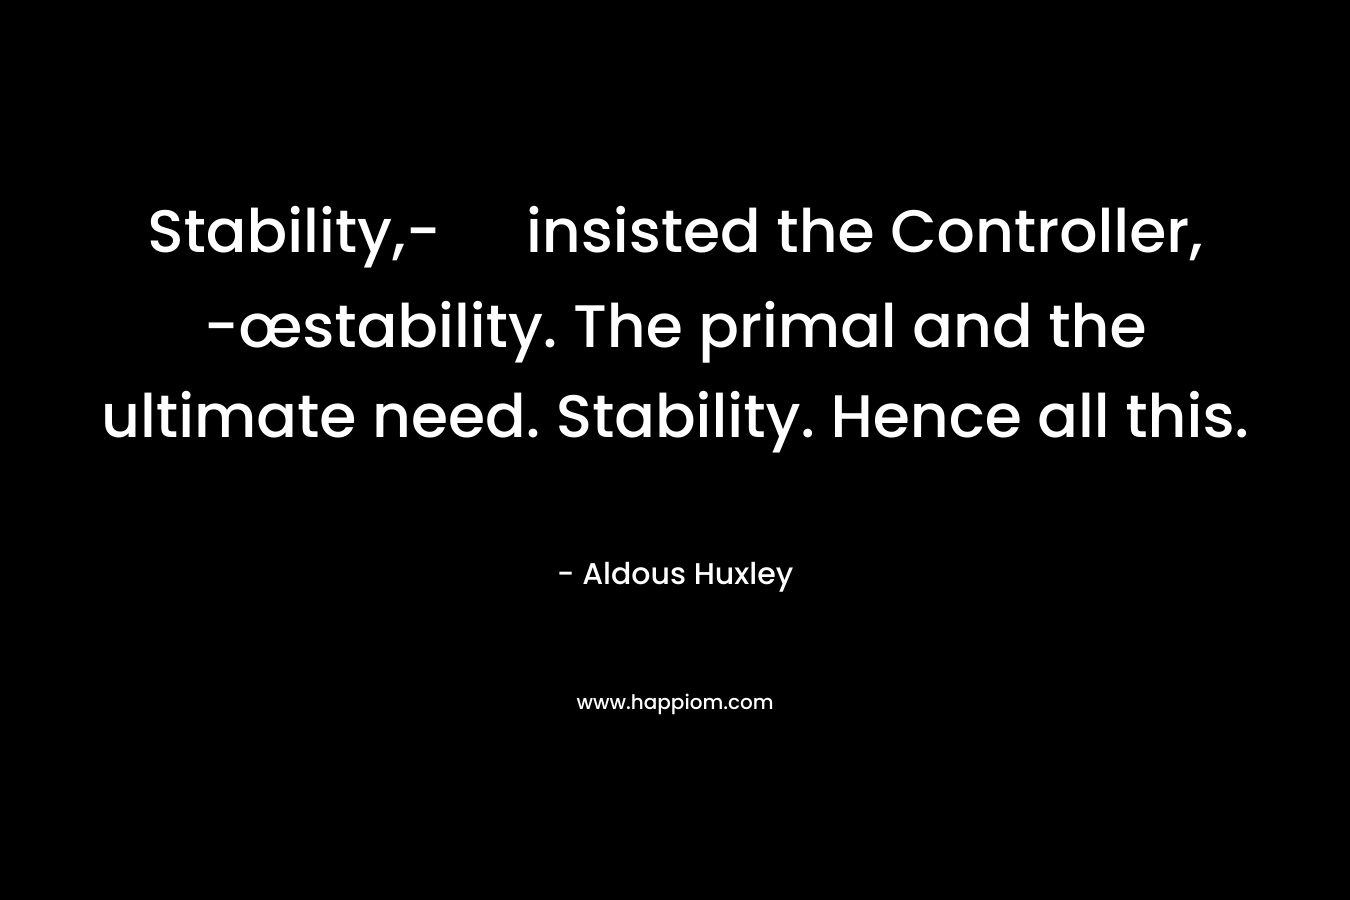 Stability,- insisted the Controller, -œstability. The primal and the ultimate need. Stability. Hence all this.